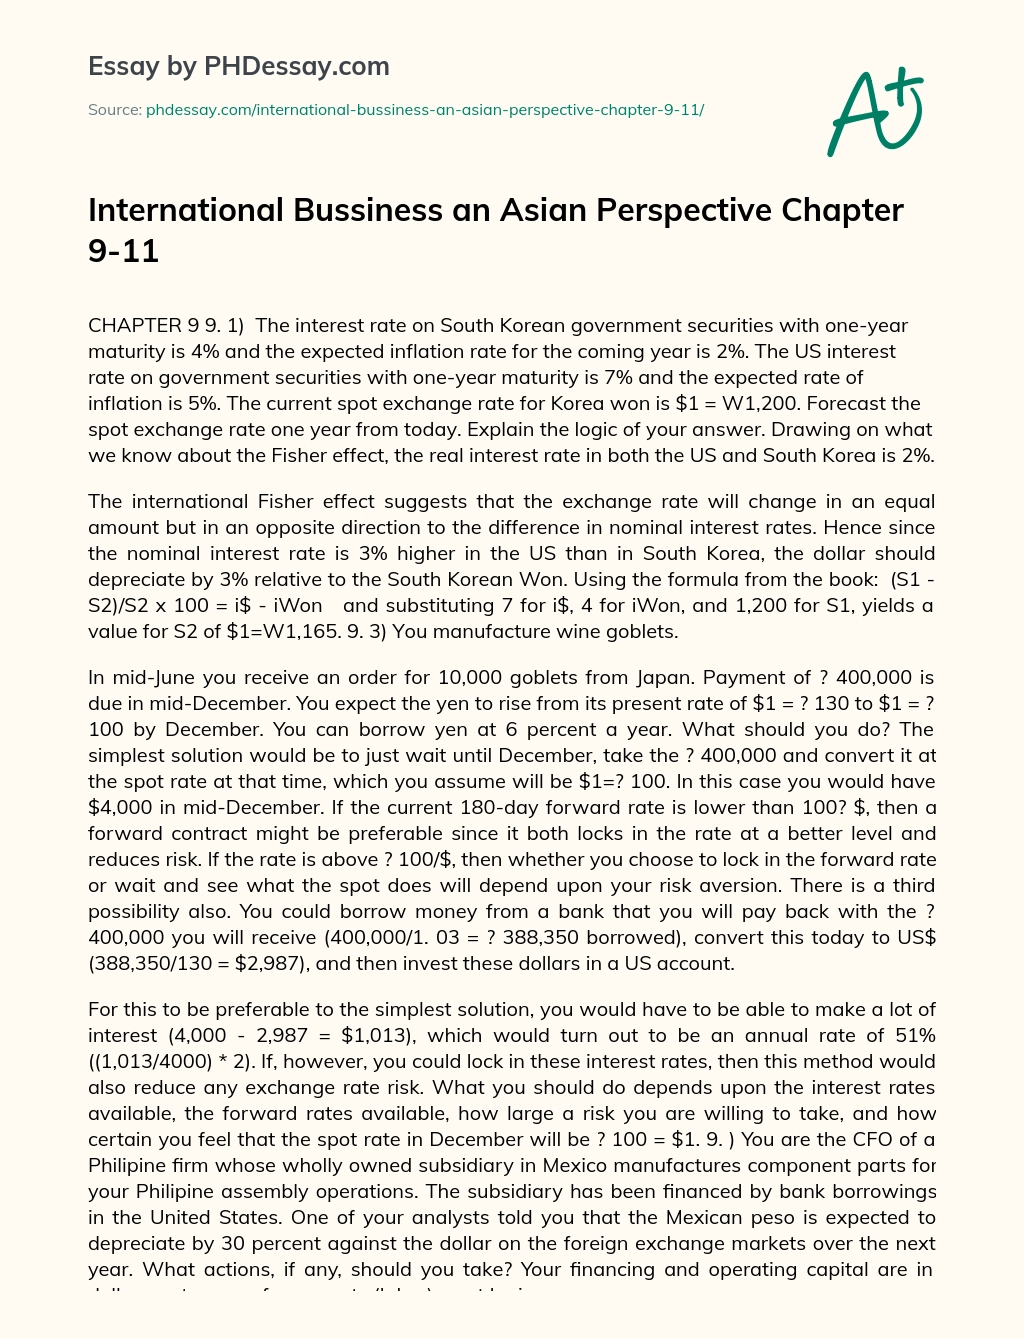 International Bussiness an Asian Perspective Chapter 9-11 essay